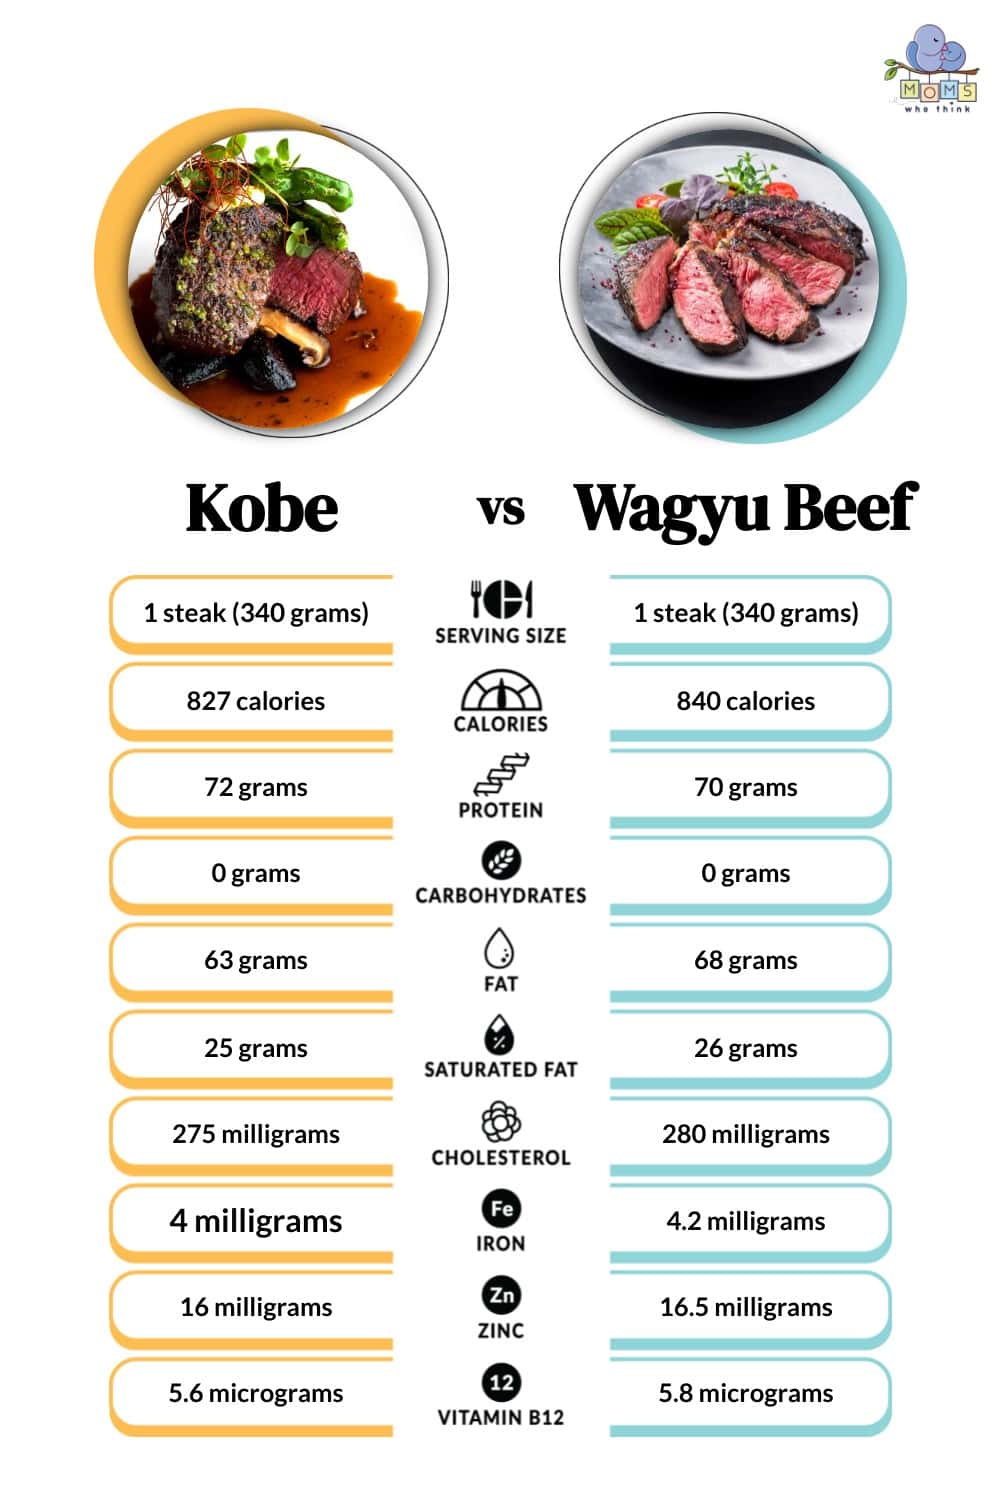 Kobe vs. Wagyu Beef: Nutritional Facts